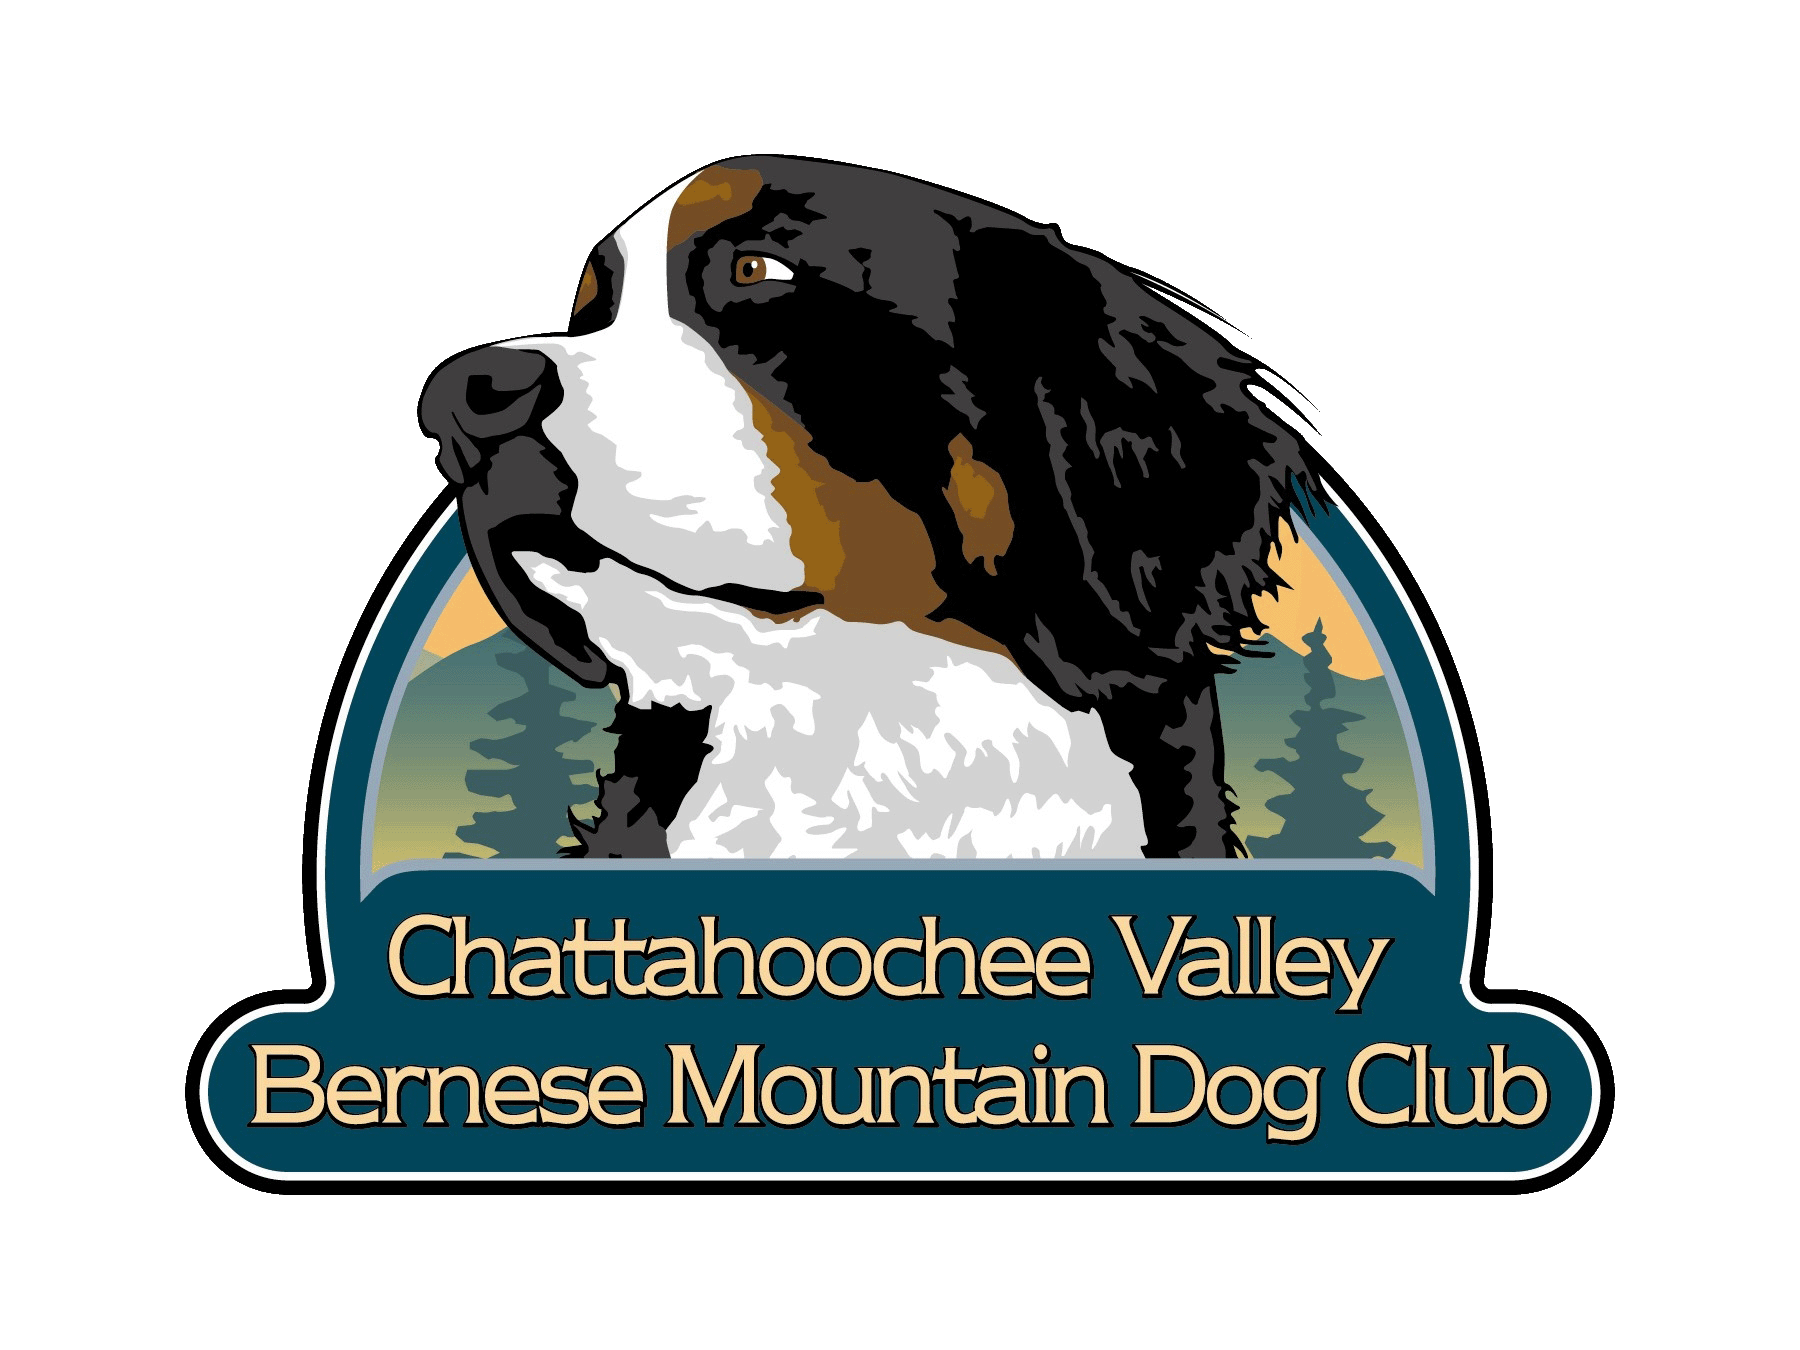 Chattahoochee Valley Bernese Mountain Dog Club